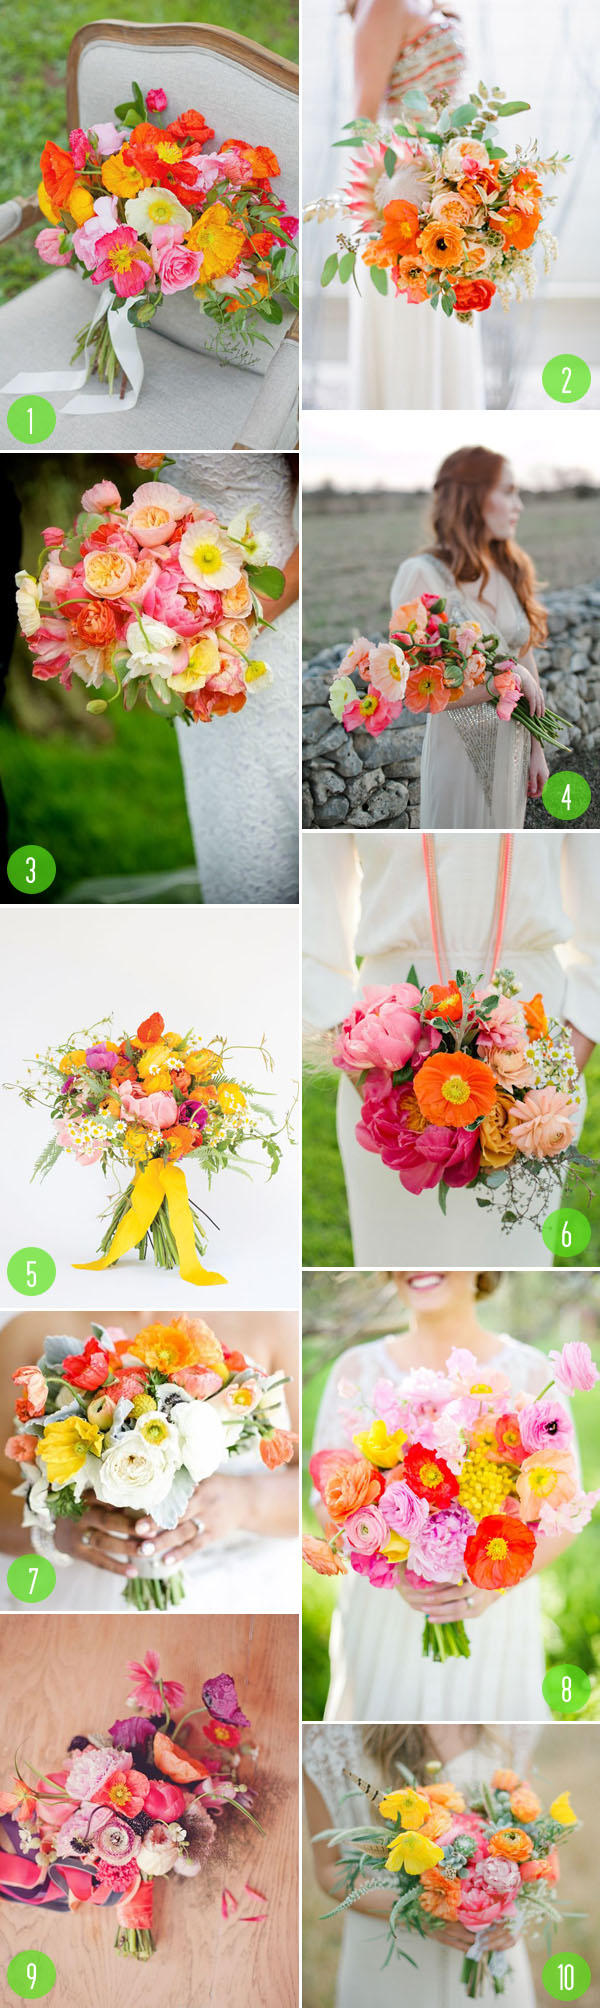 top 10: poppy bouquets